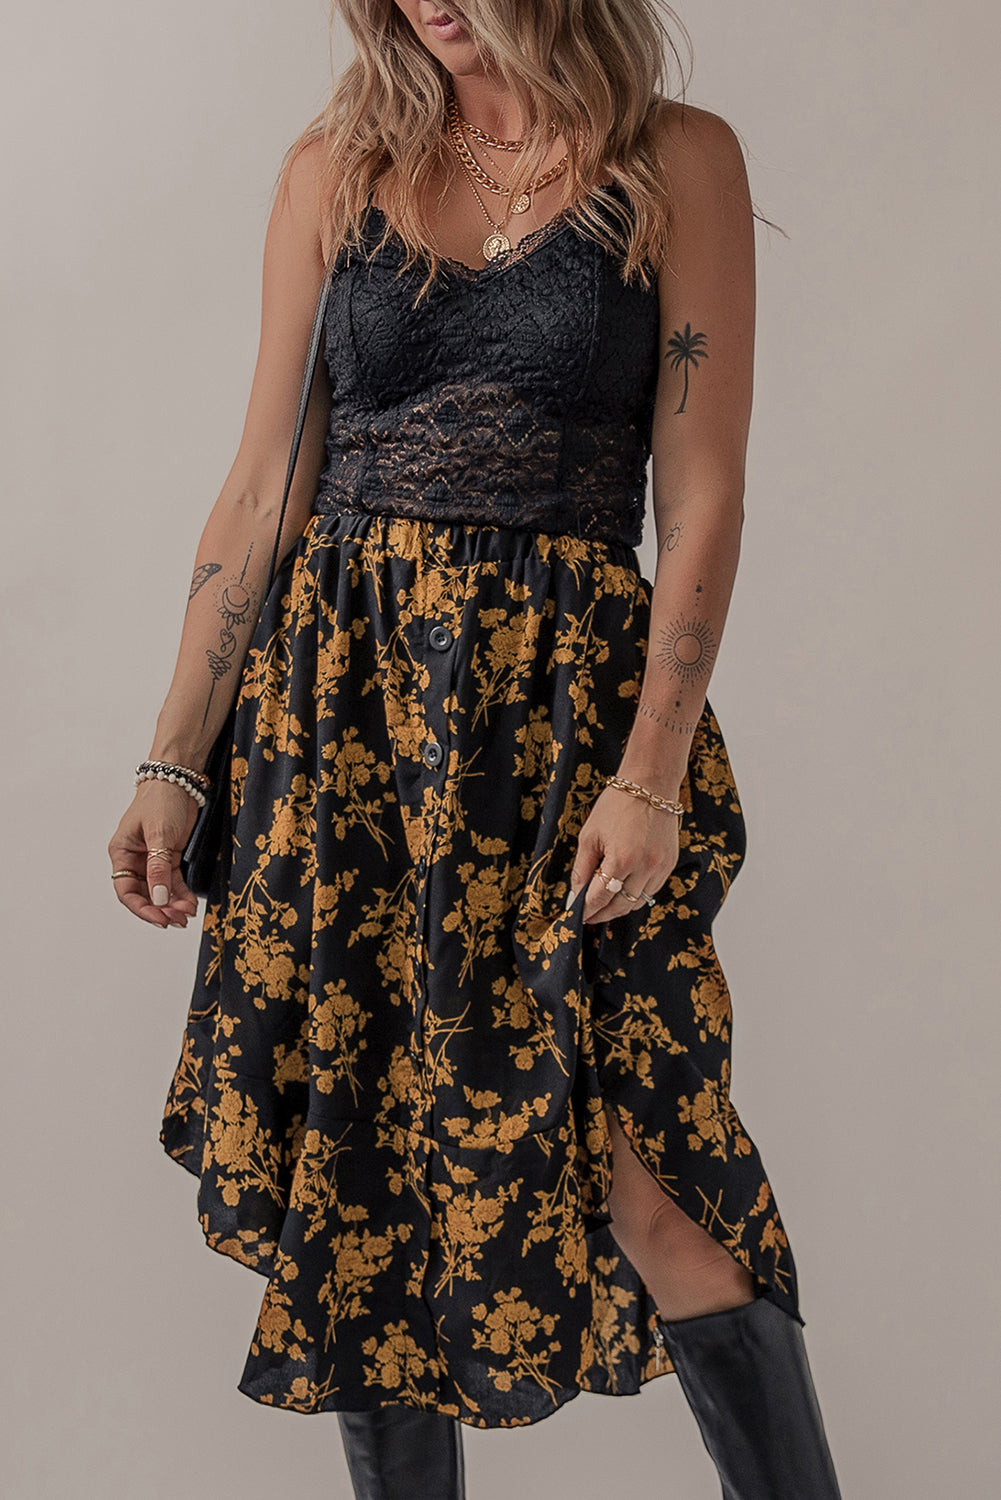 Black Printed Elastic Waist Button Decor Floral Ruffle Skirt